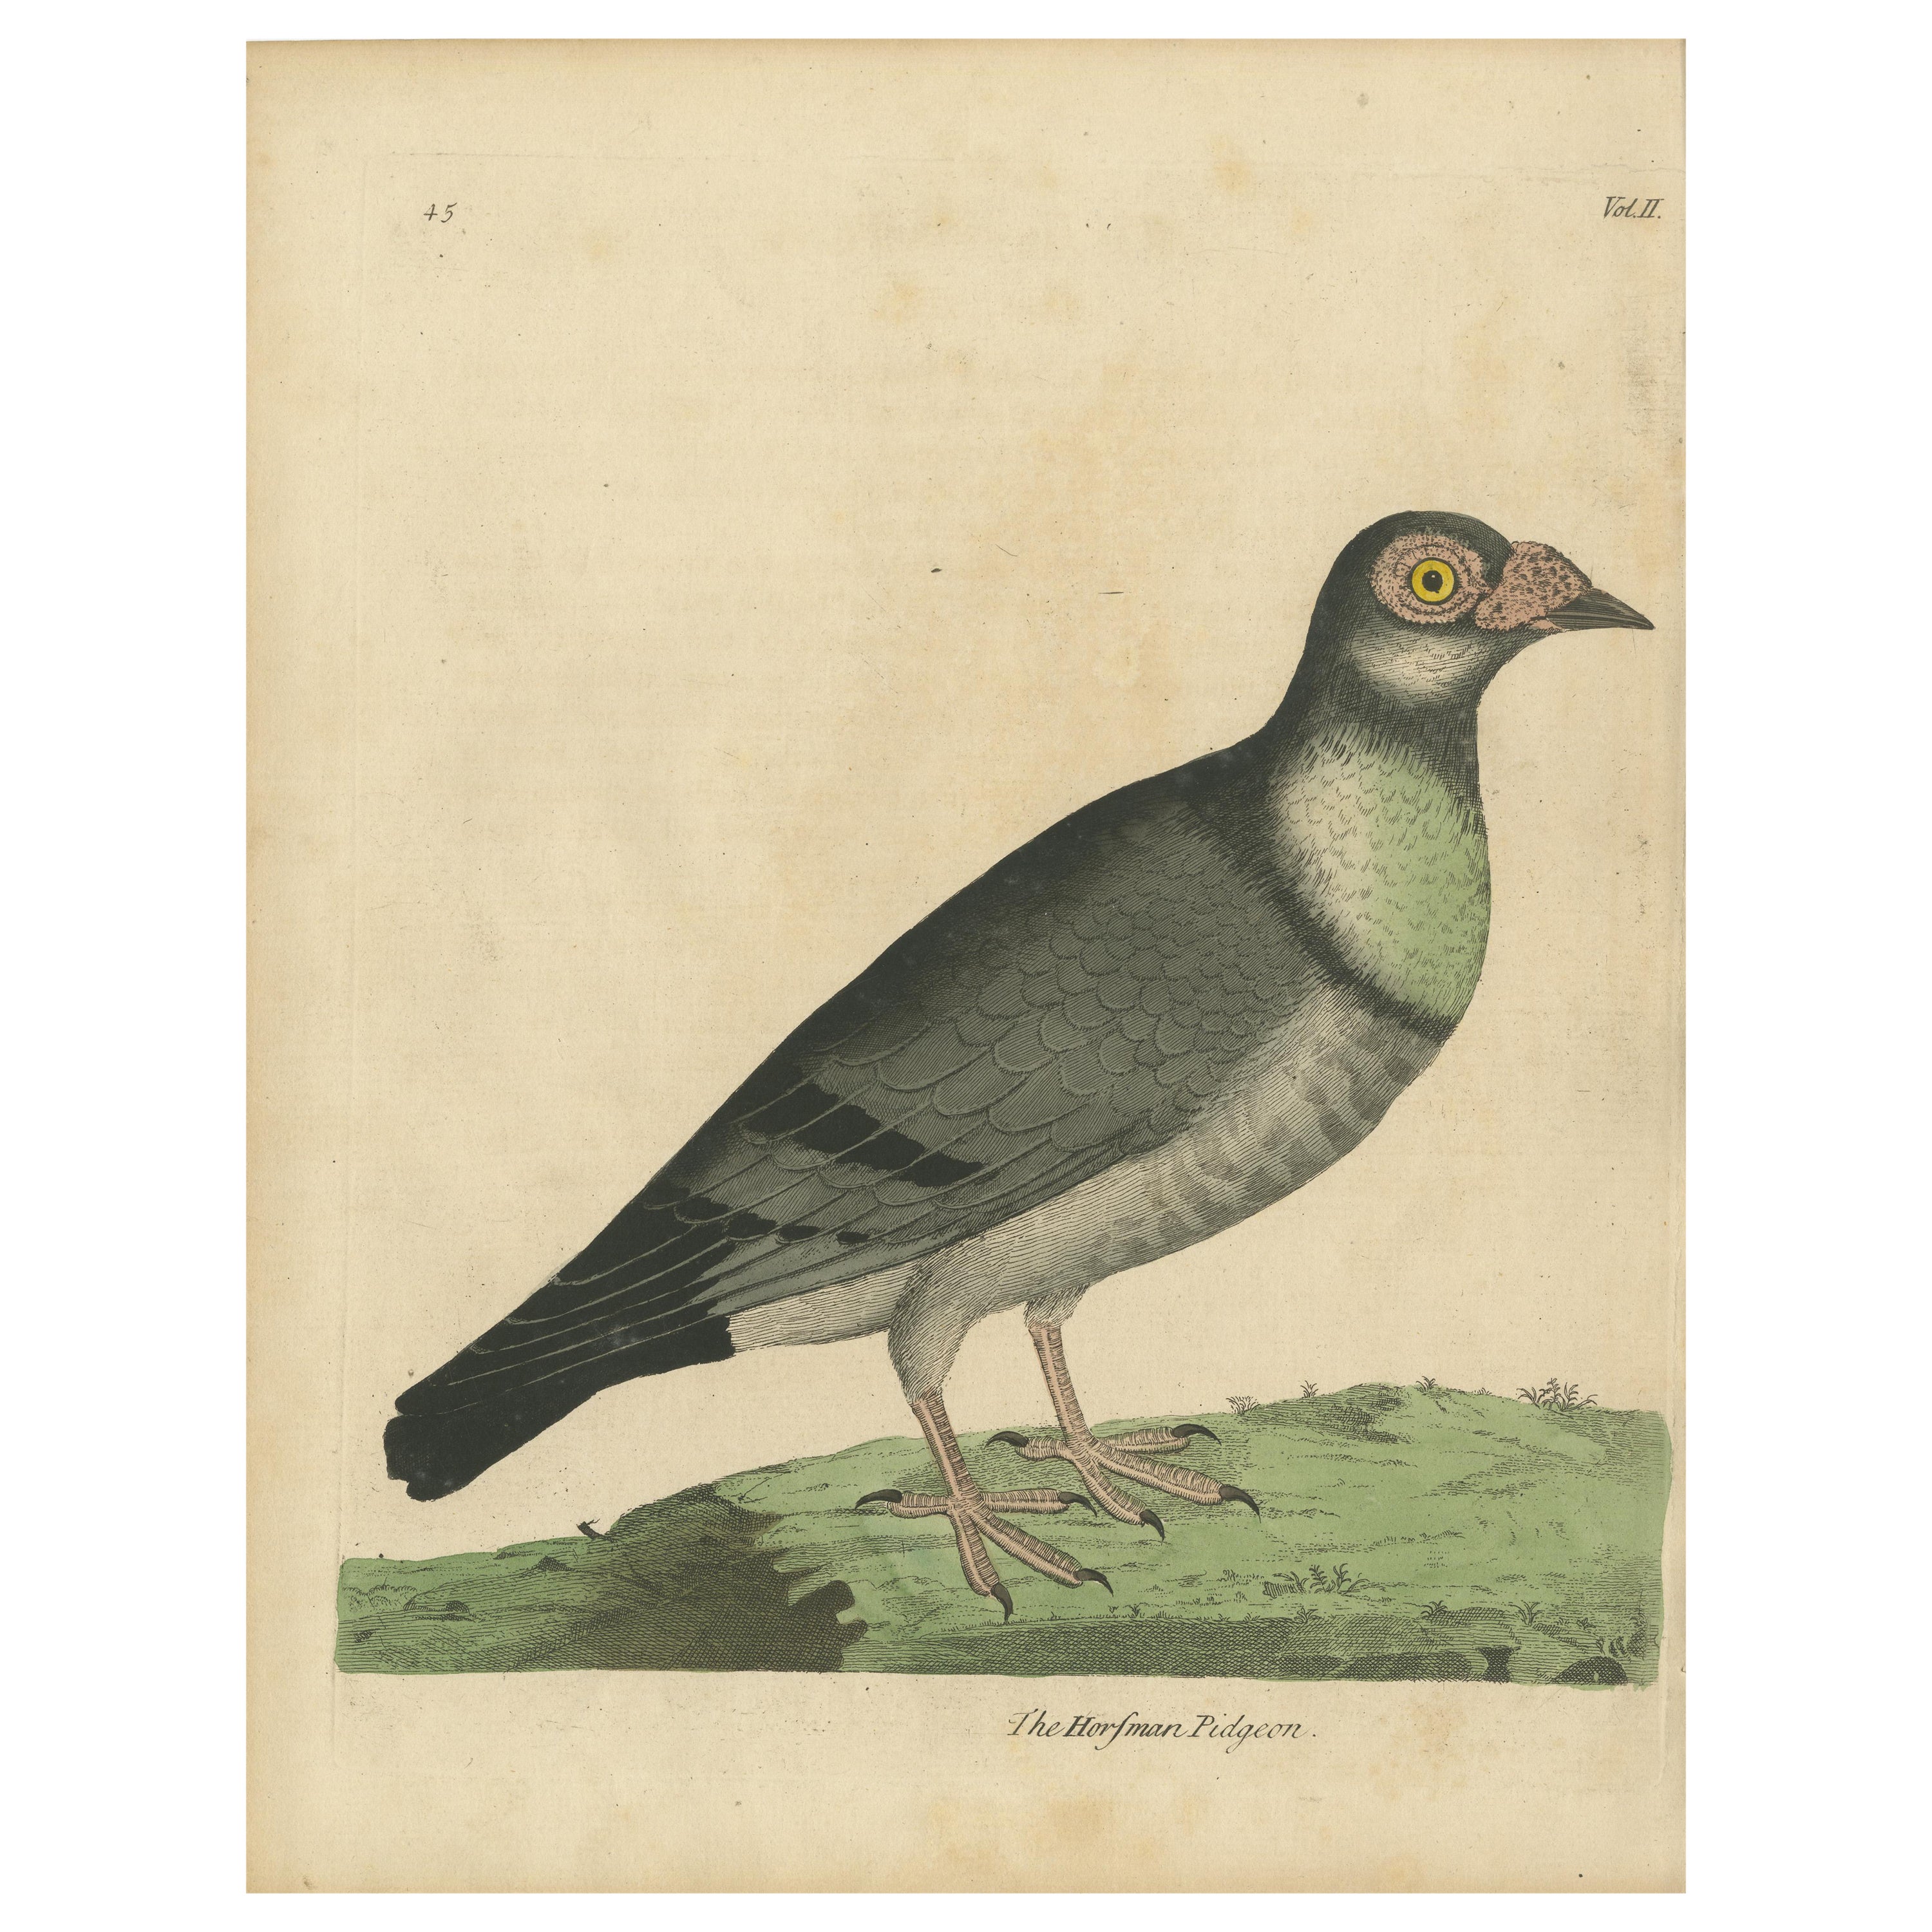 Antique Bird Print of a Horseman Pigeon For Sale